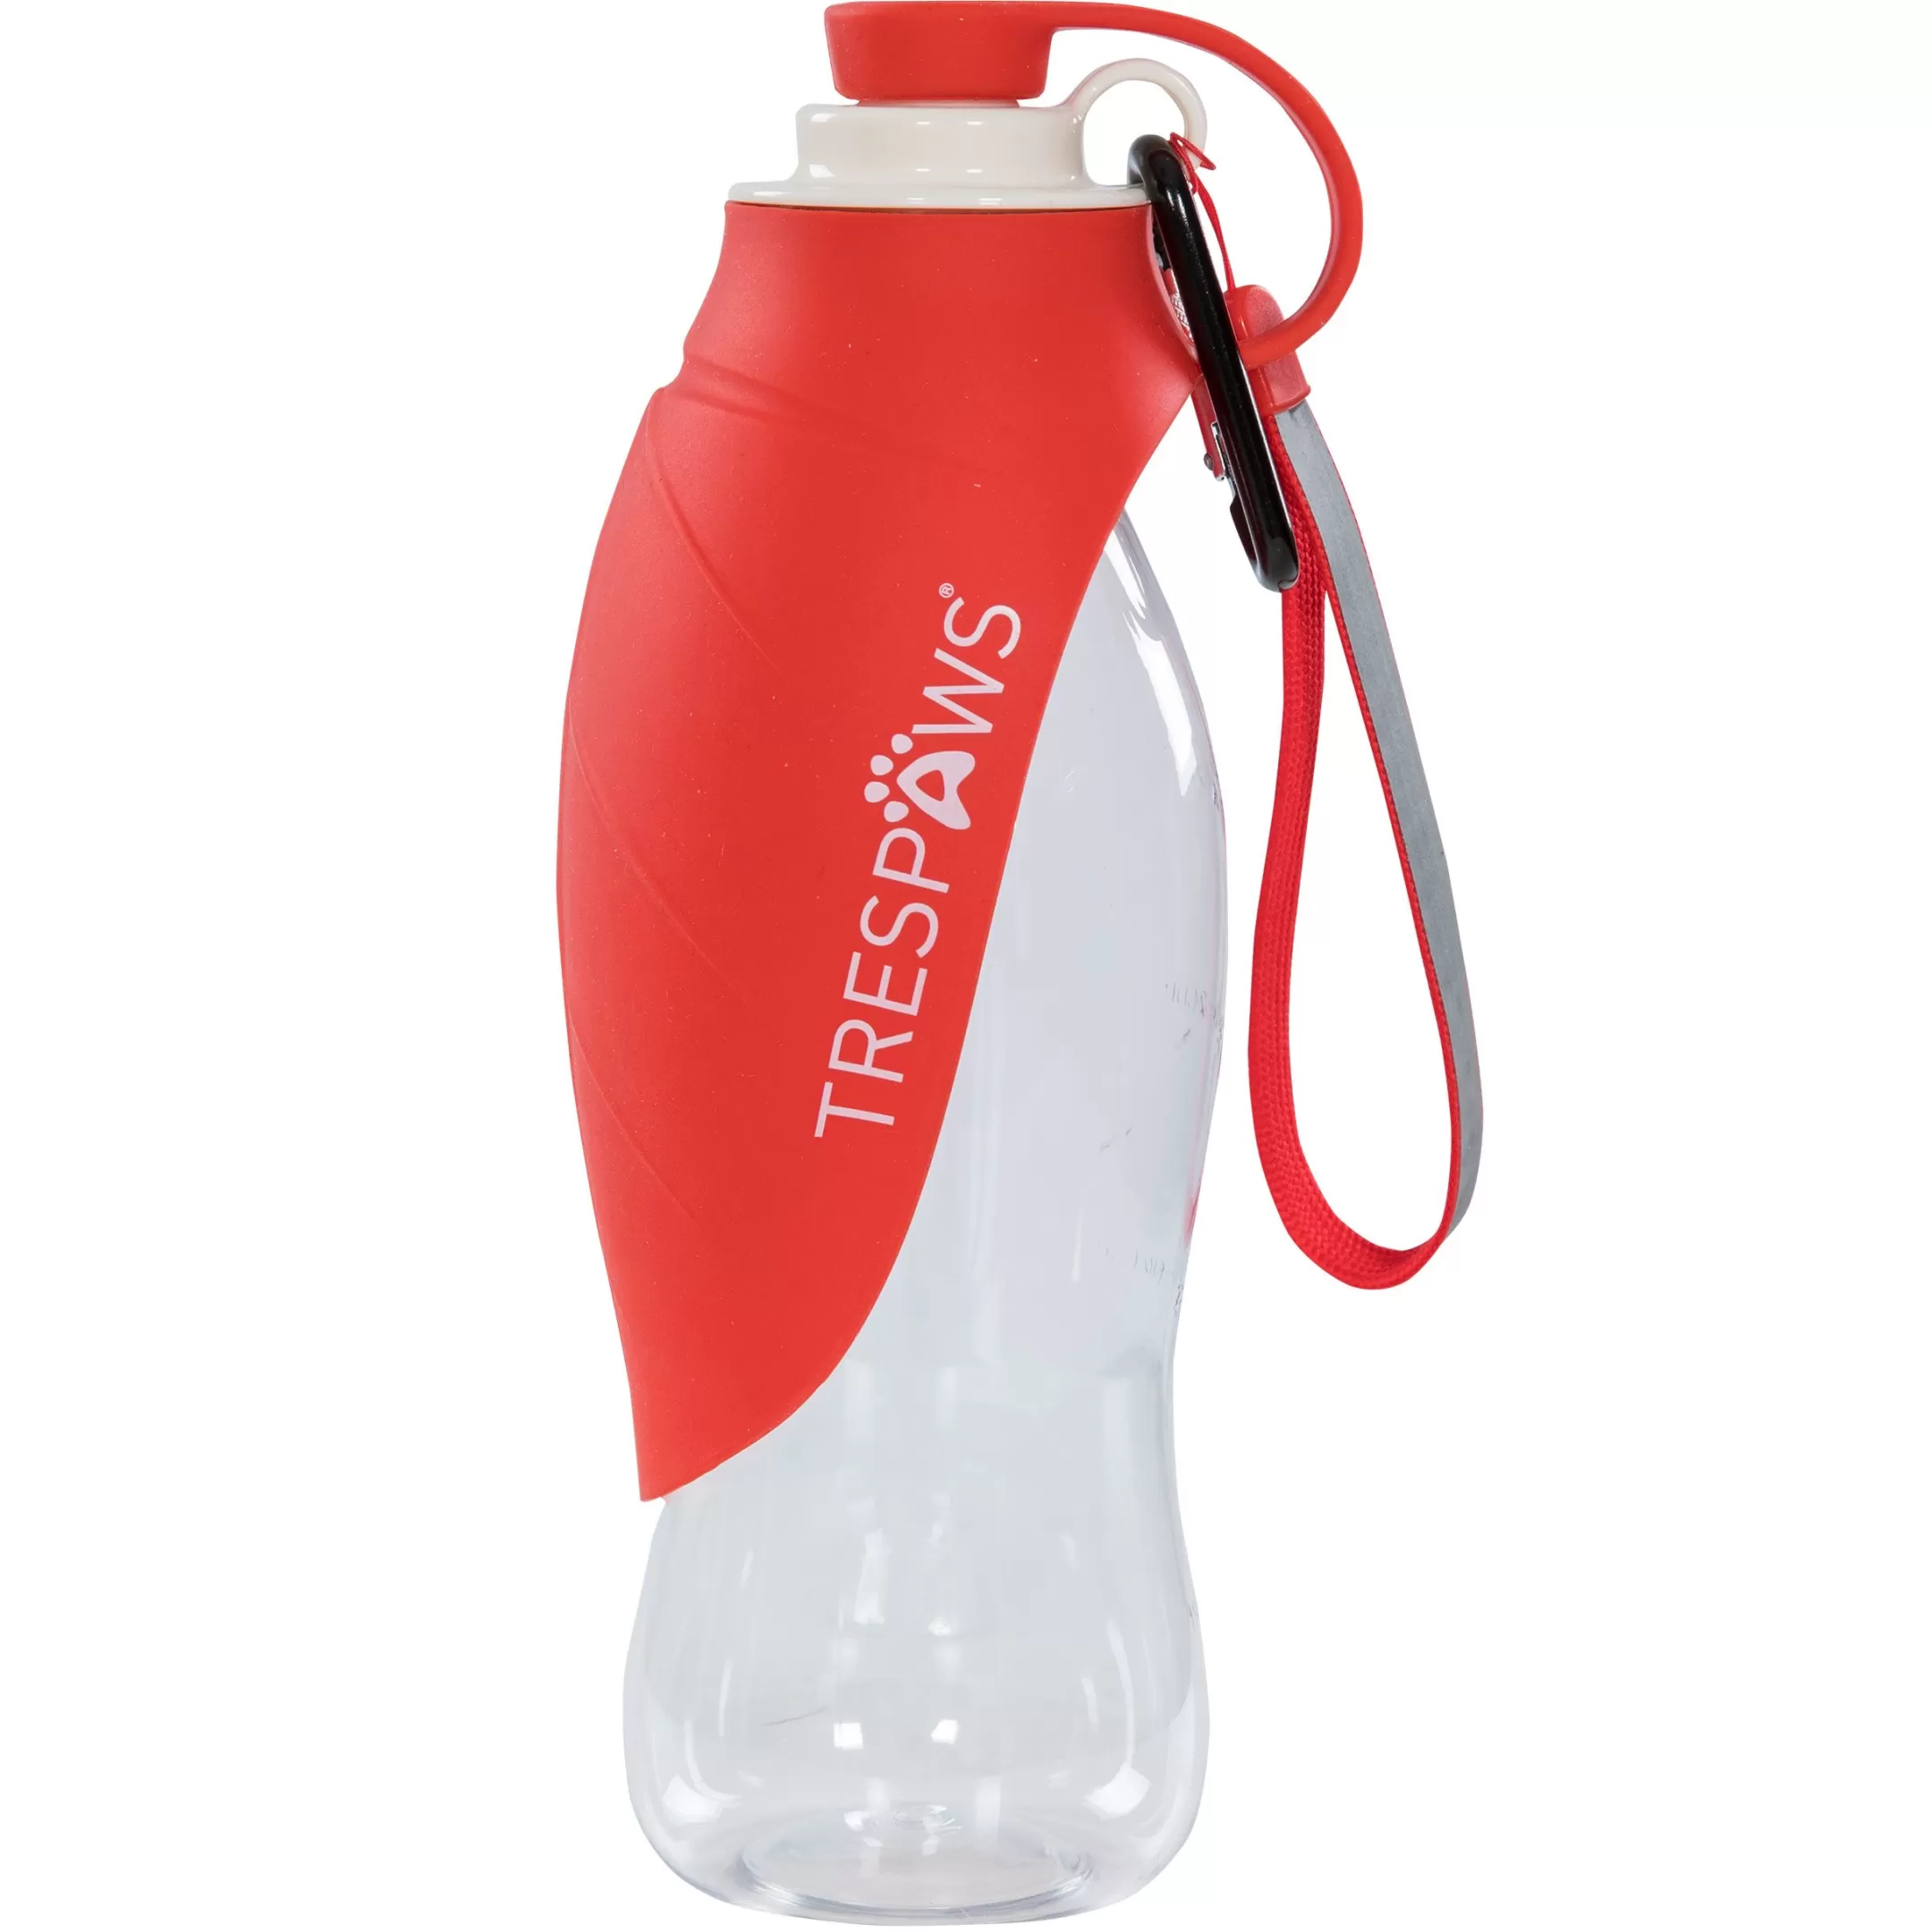 Trespaws Dog Water Bottle with Drinking Bowl Tamu | Trespass Hot